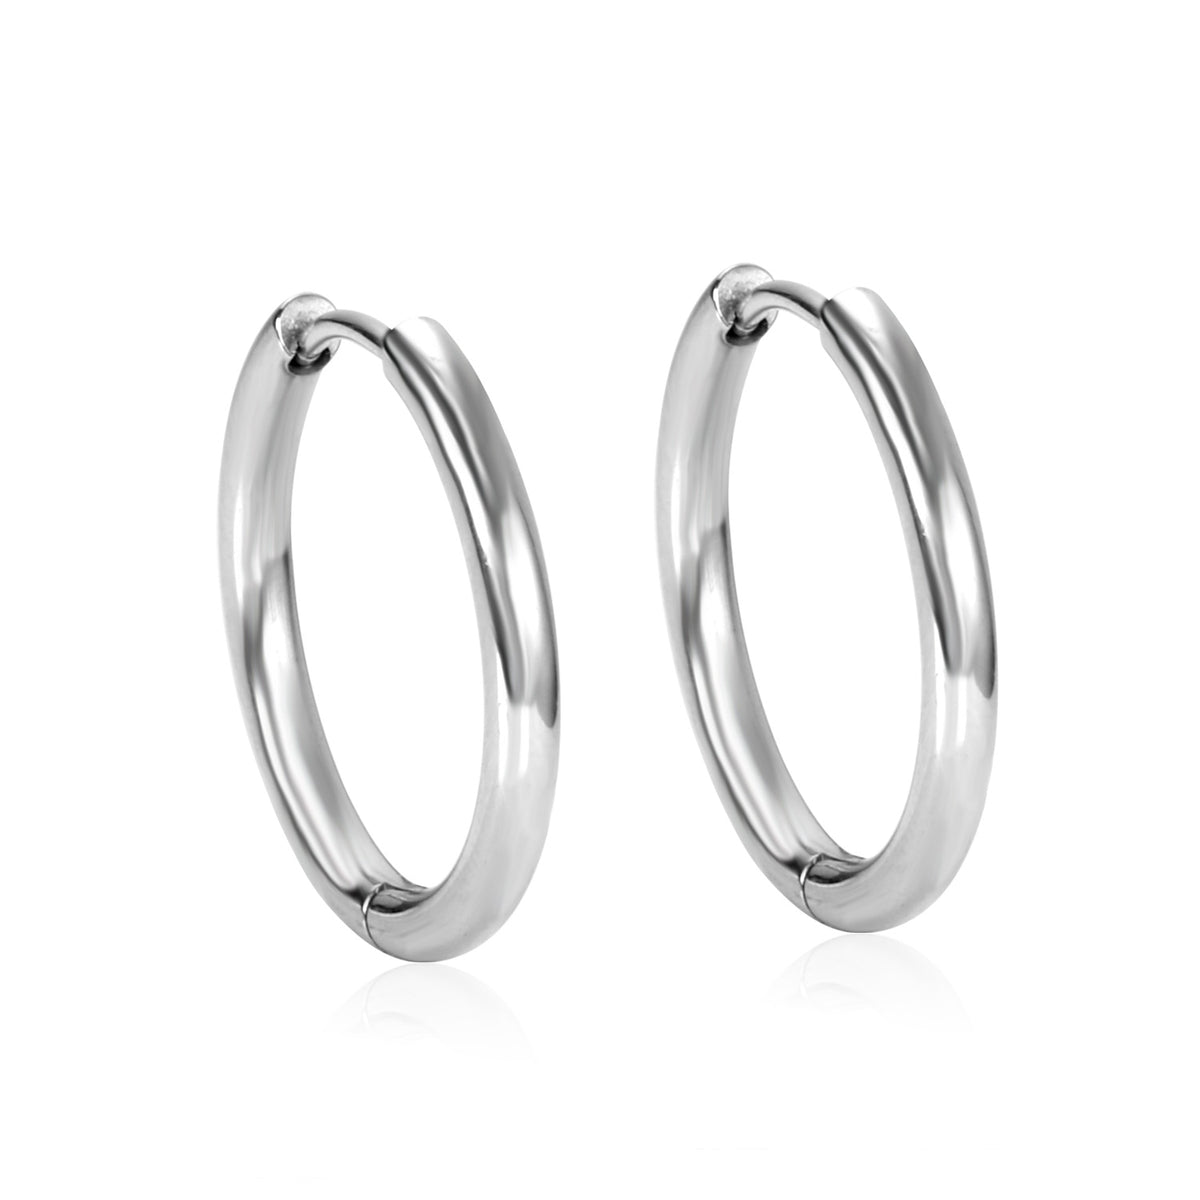 Pair Small Hoop Earrings Silver Color Stainles Steel Round Circle Pendientes Mujer